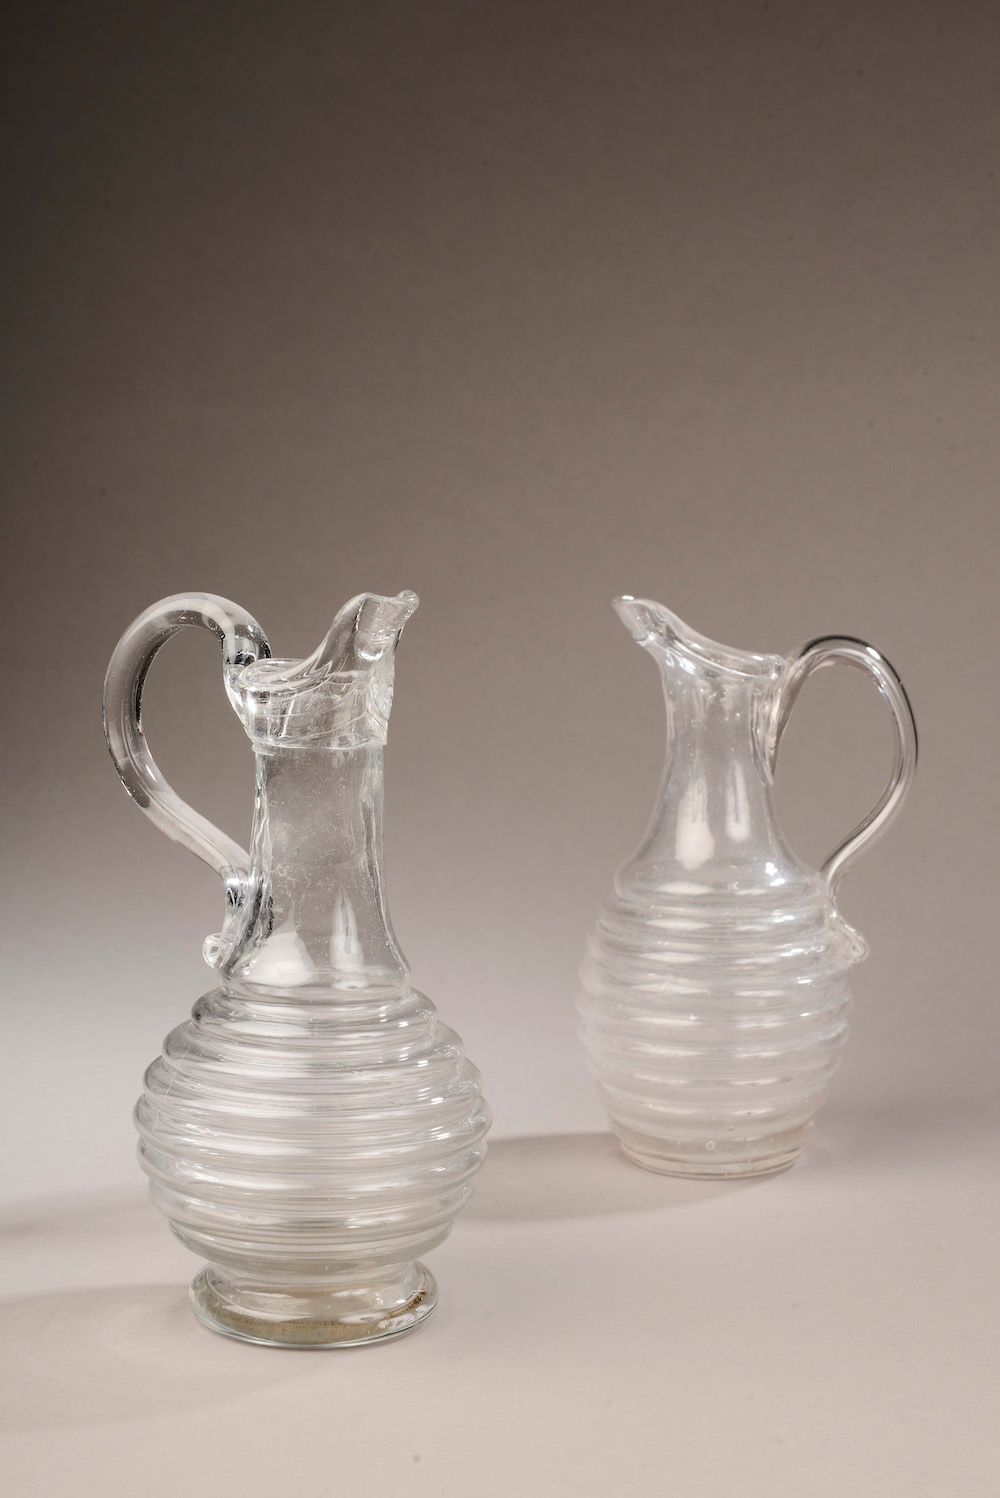 Null 两个吹制的玻璃杯，手柄是通过加热而形成的，杯身有环形。

诺曼底，18世纪。

高度。20.5和22厘米